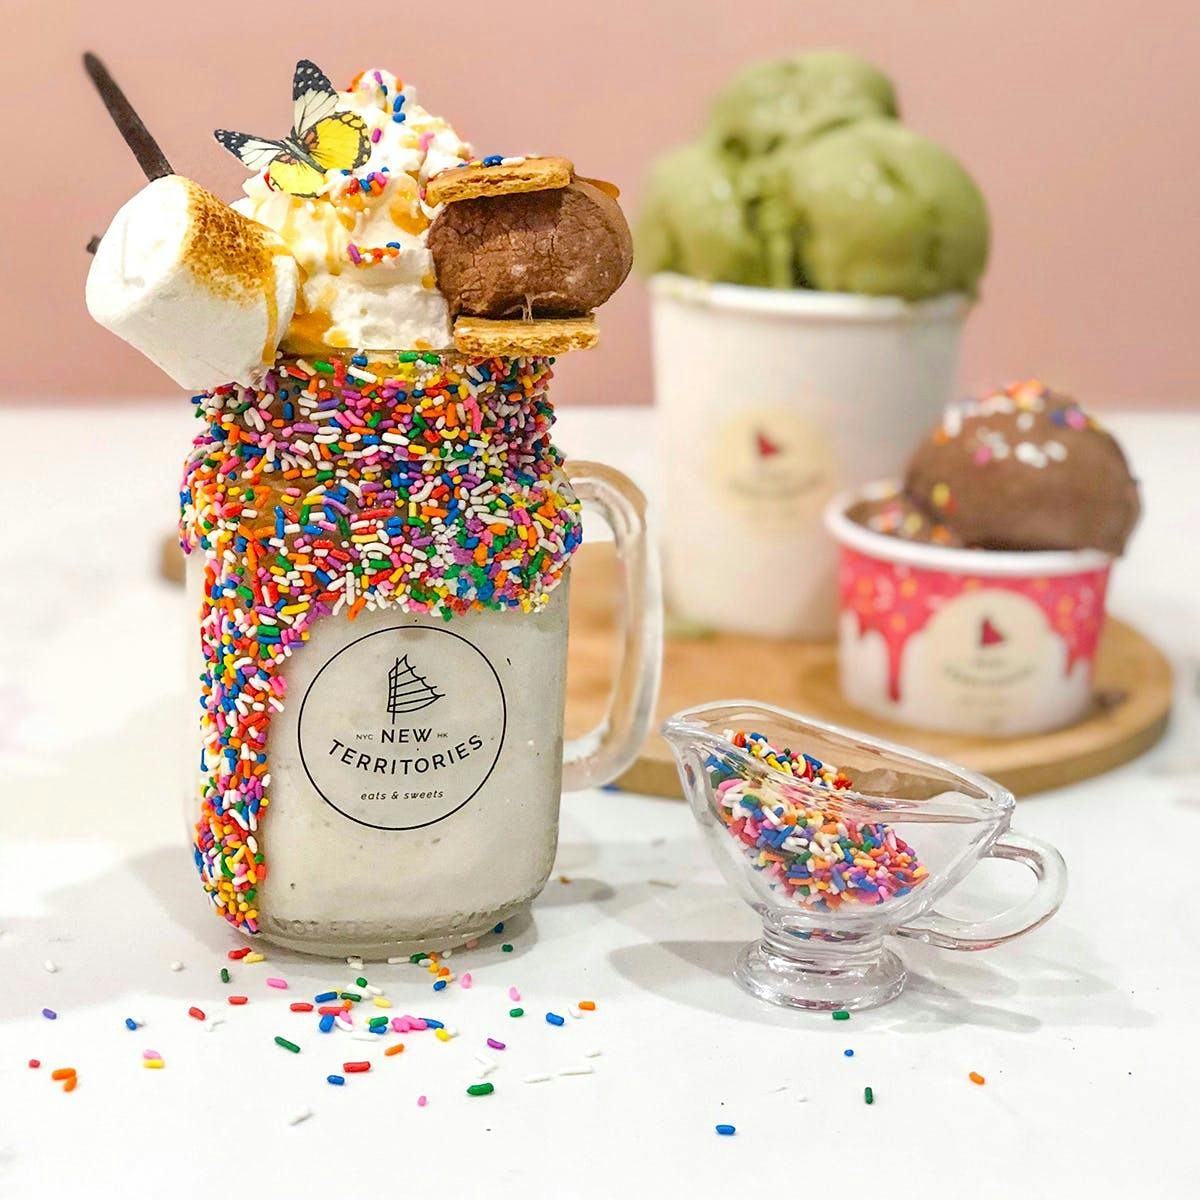 Oreo Milkshake Gift Set Includes 2 Ceramic Cups/Ice Cream Scoop/2 Straws  New!!!!